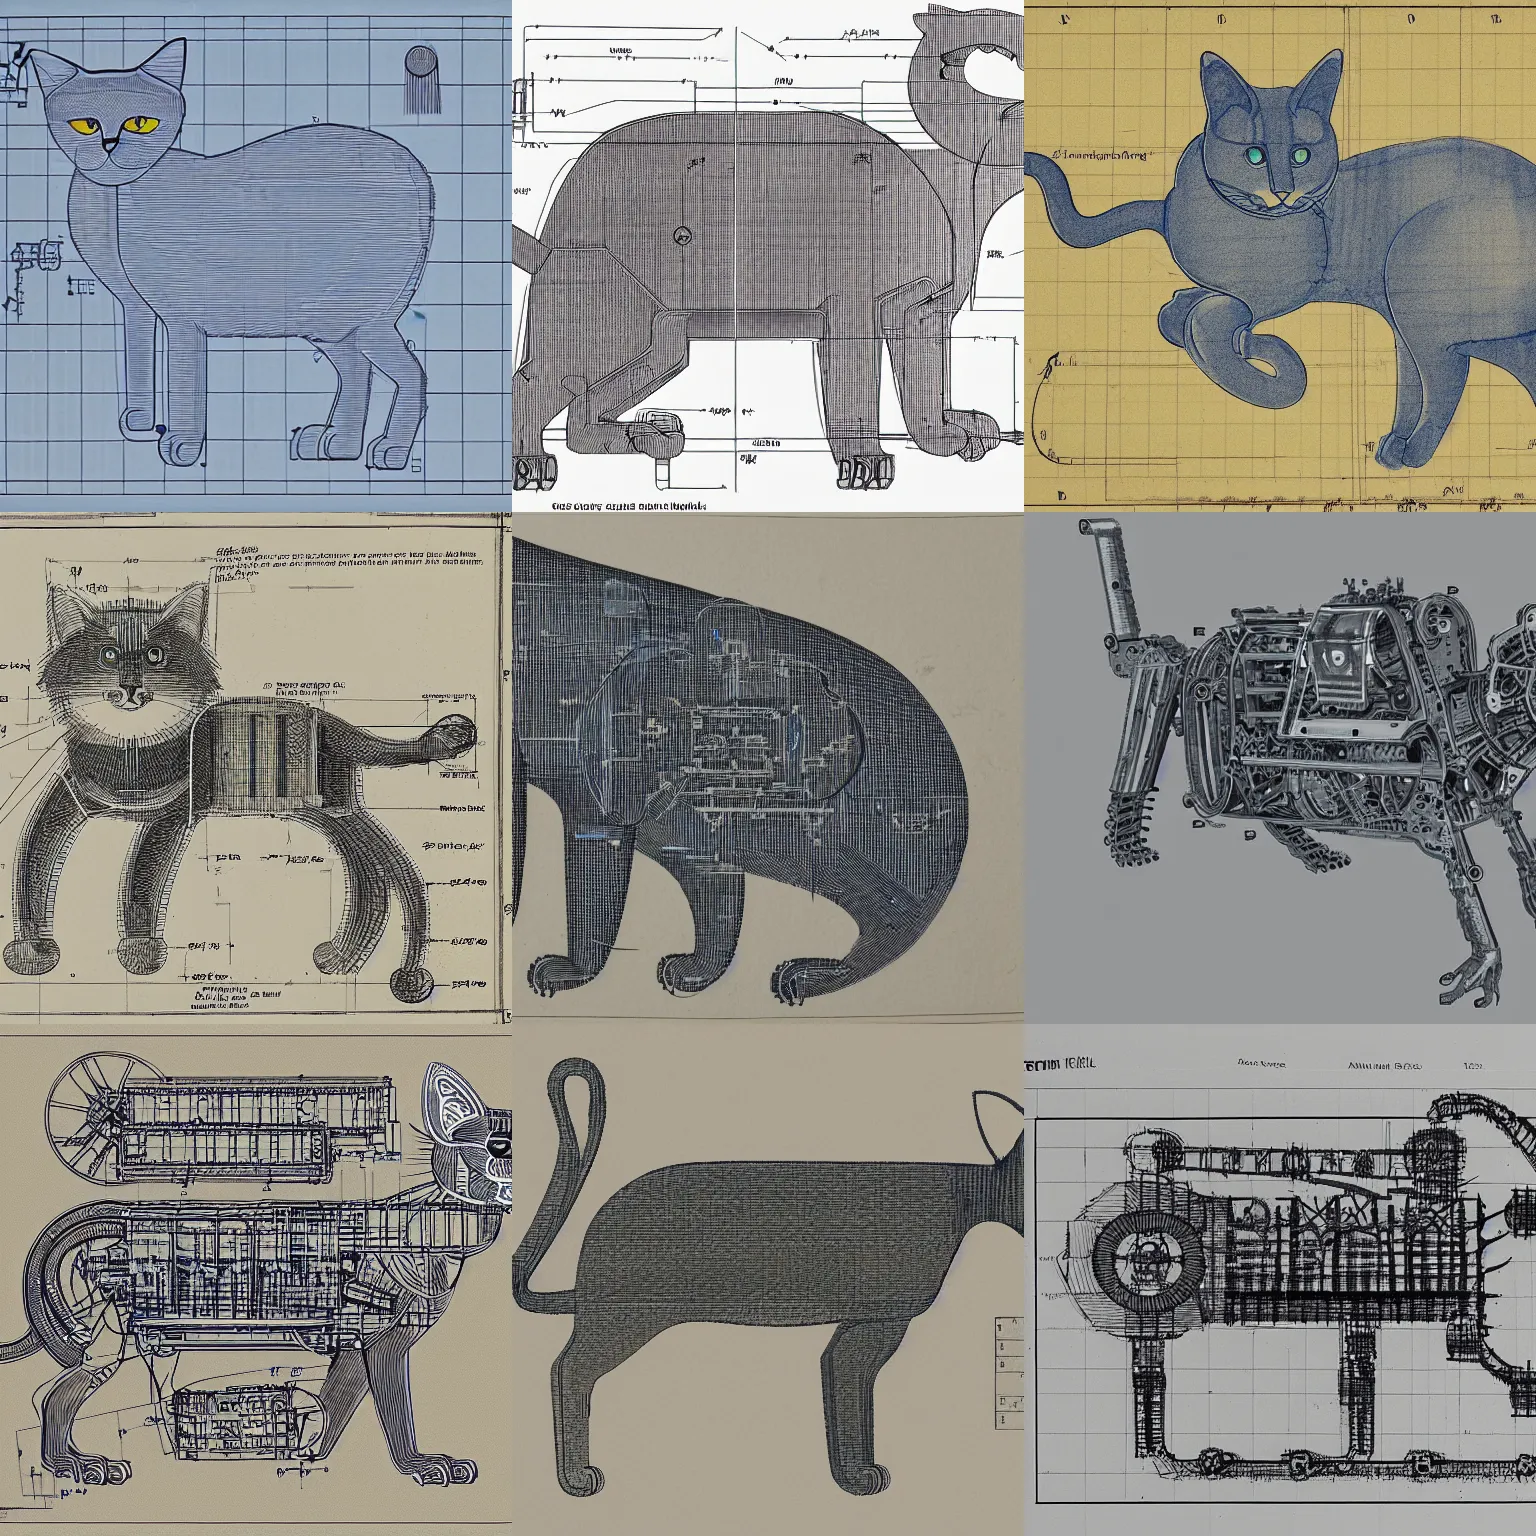 Prompt: a blueprint of a mechanical cat